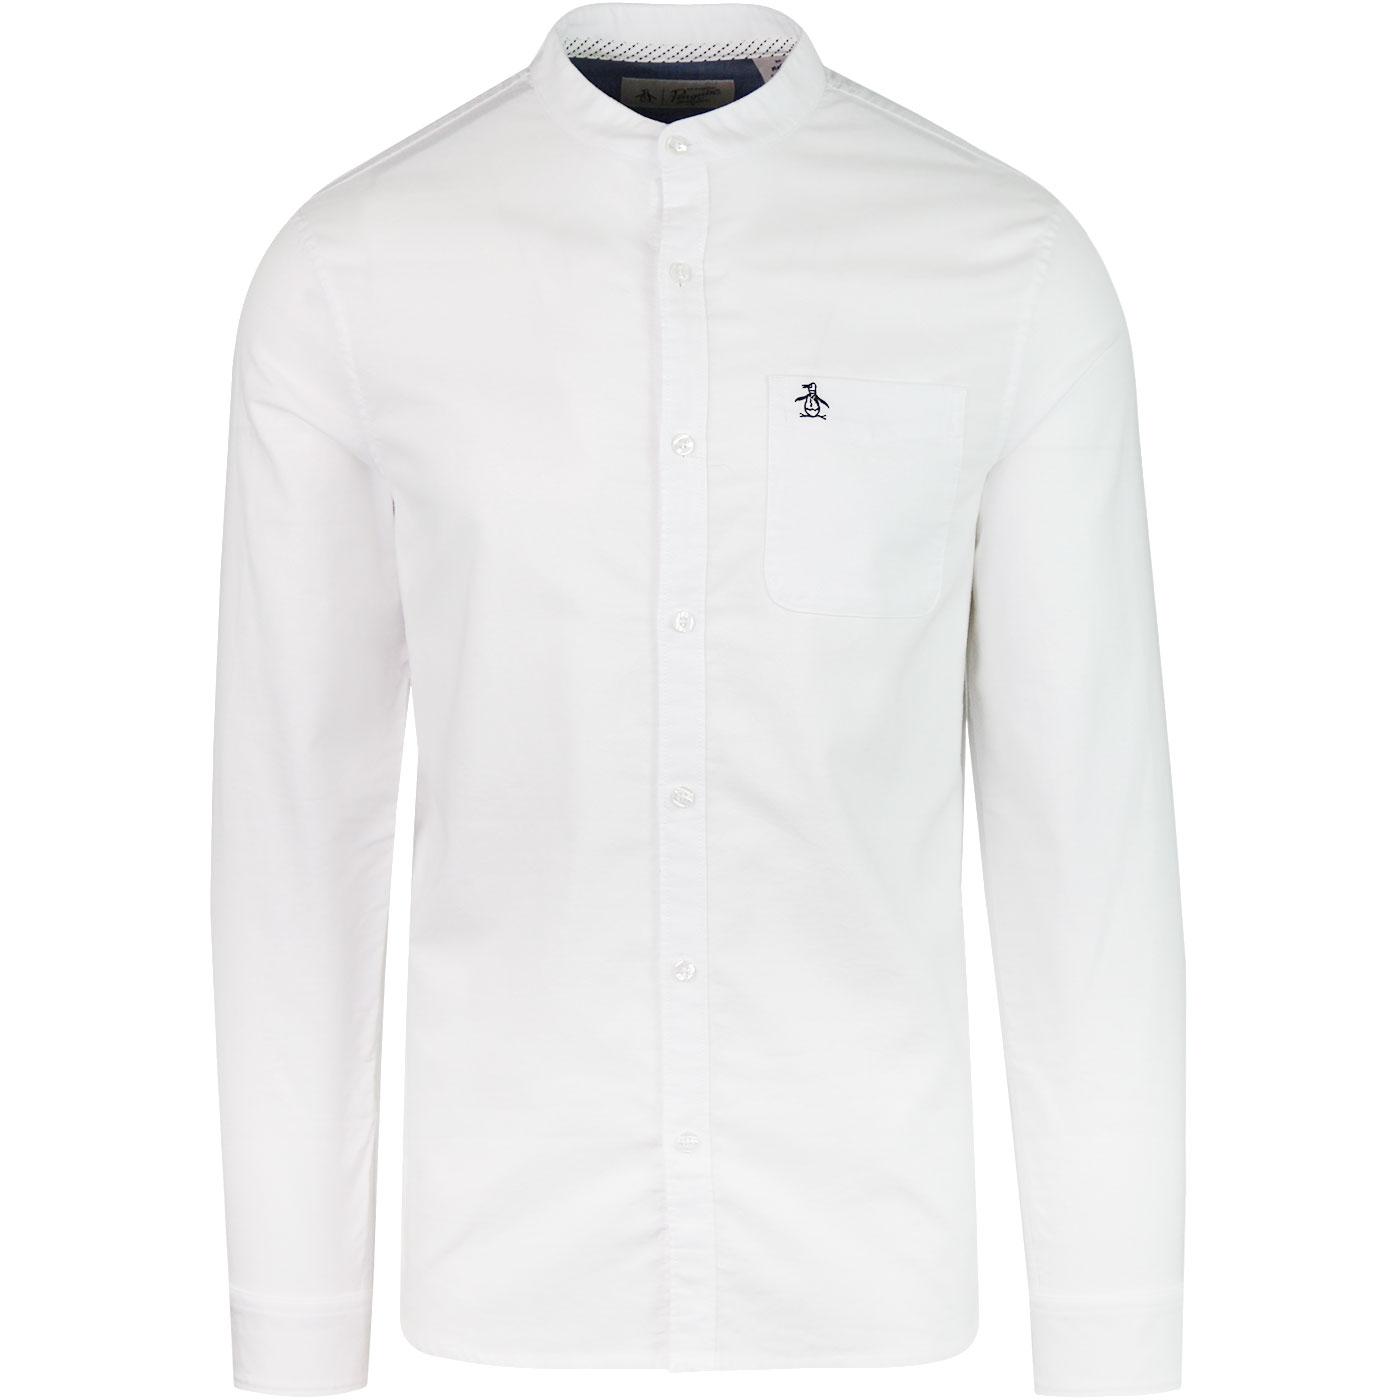 Collarless ORIGINAL PENGUIN Oxford Mod Shirt white